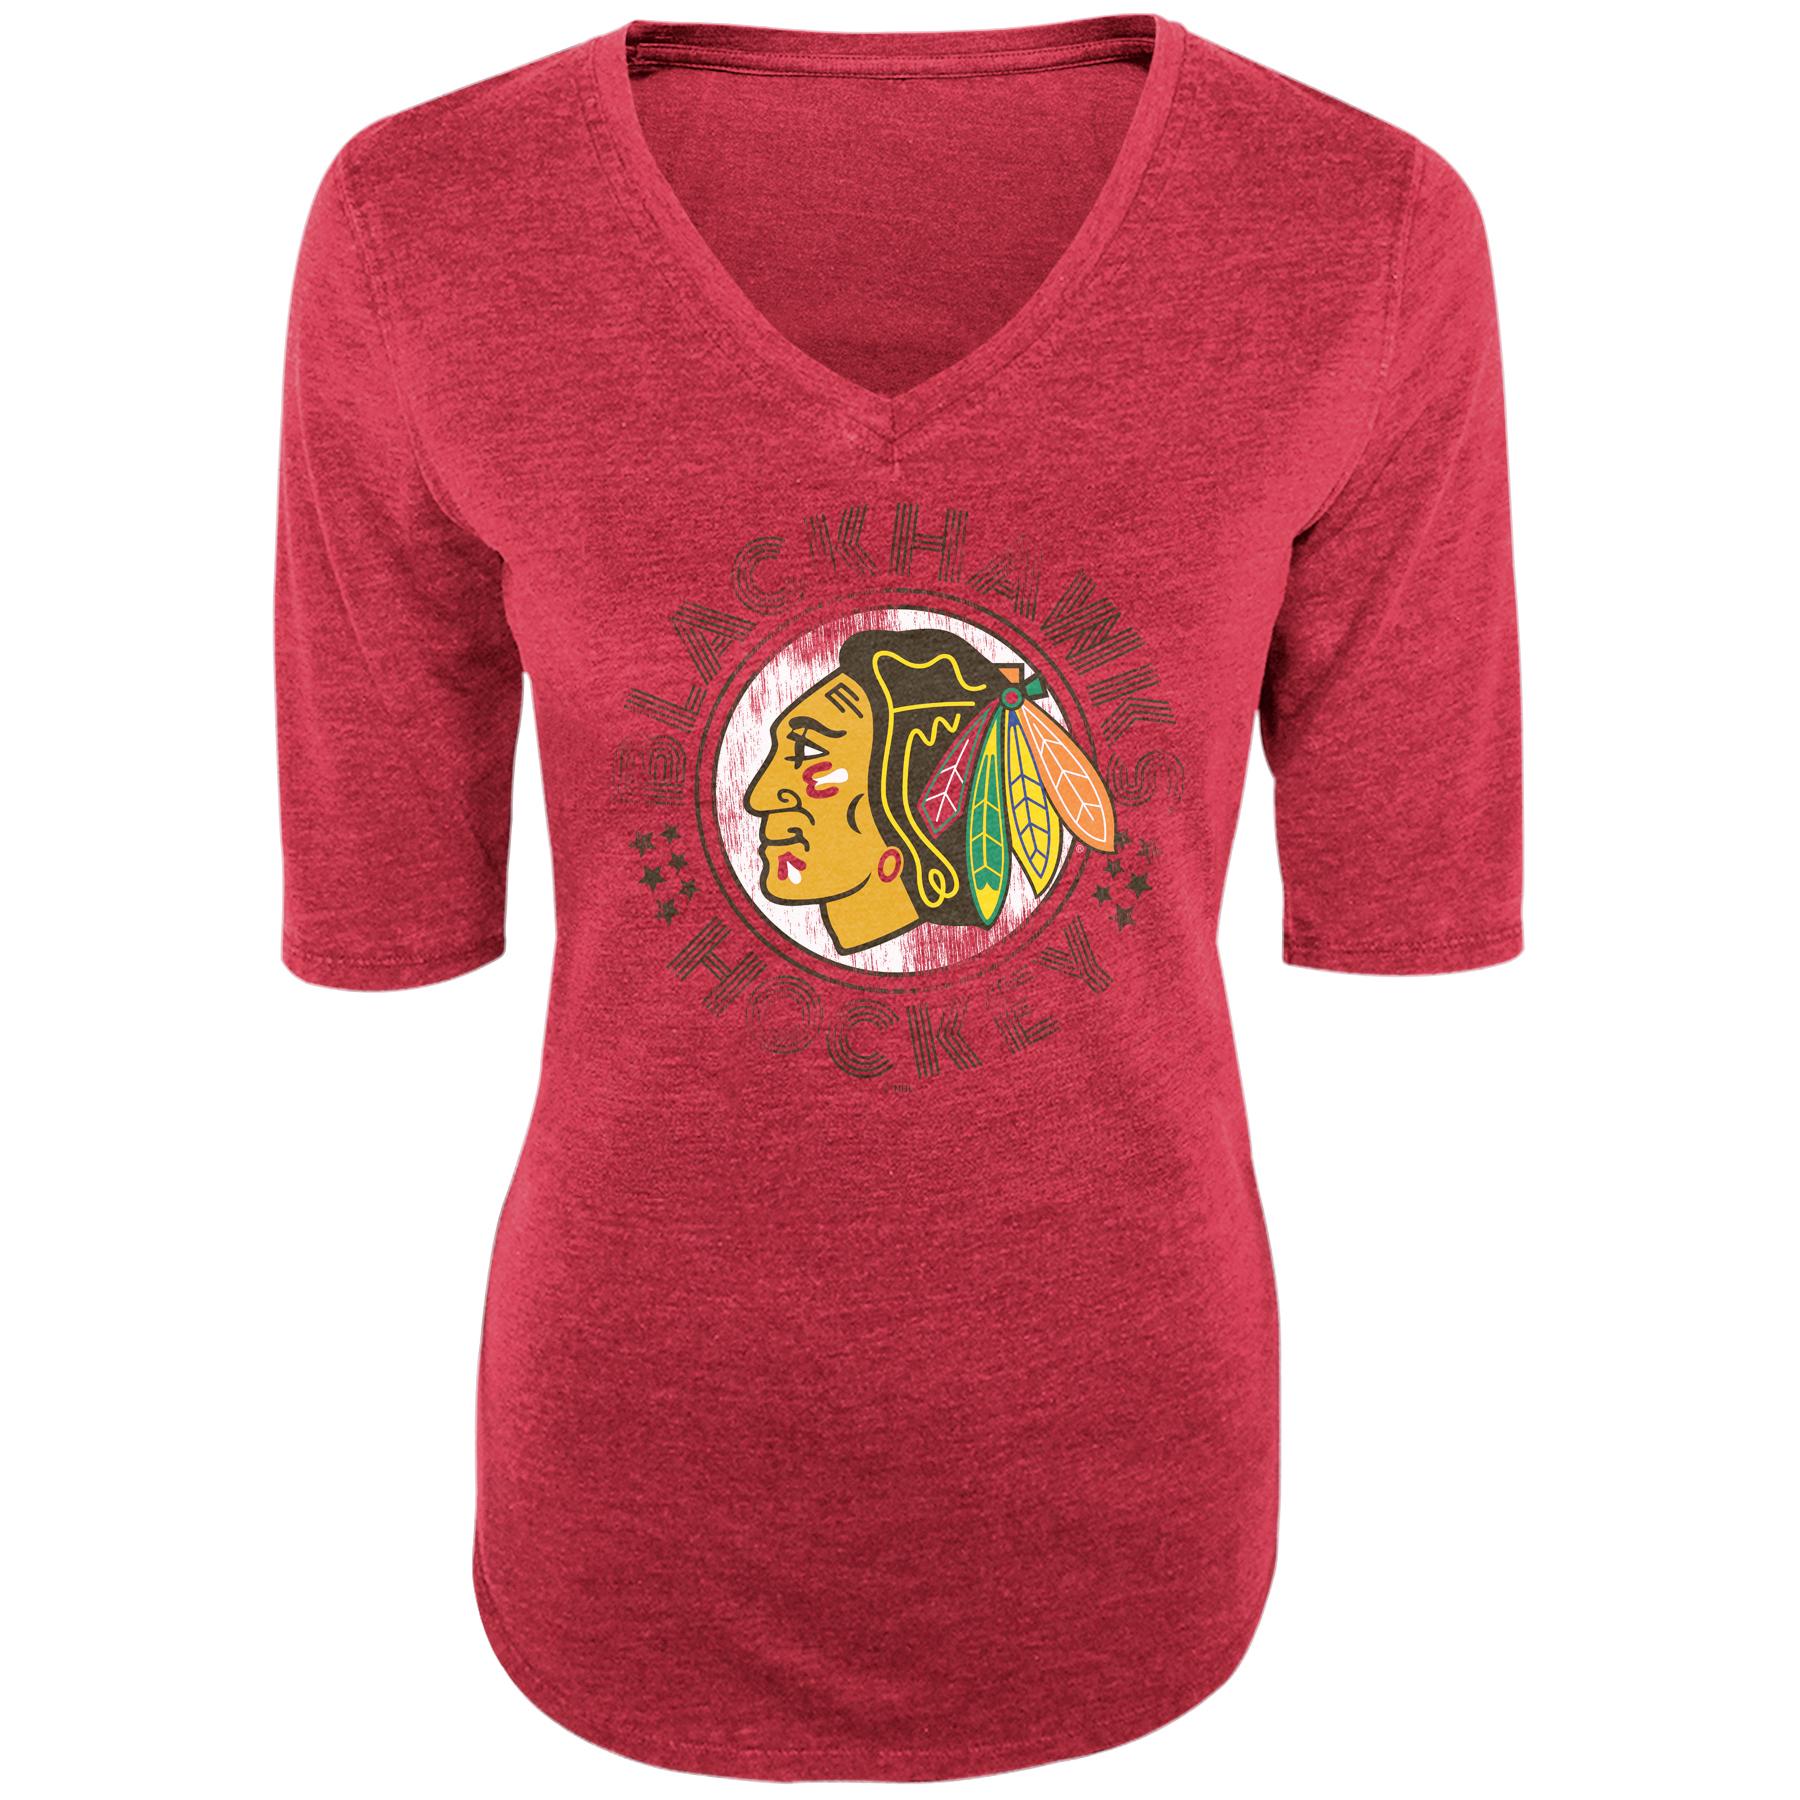 NHL Women's V-Neck T-Shirt - Chicago Blackhawks